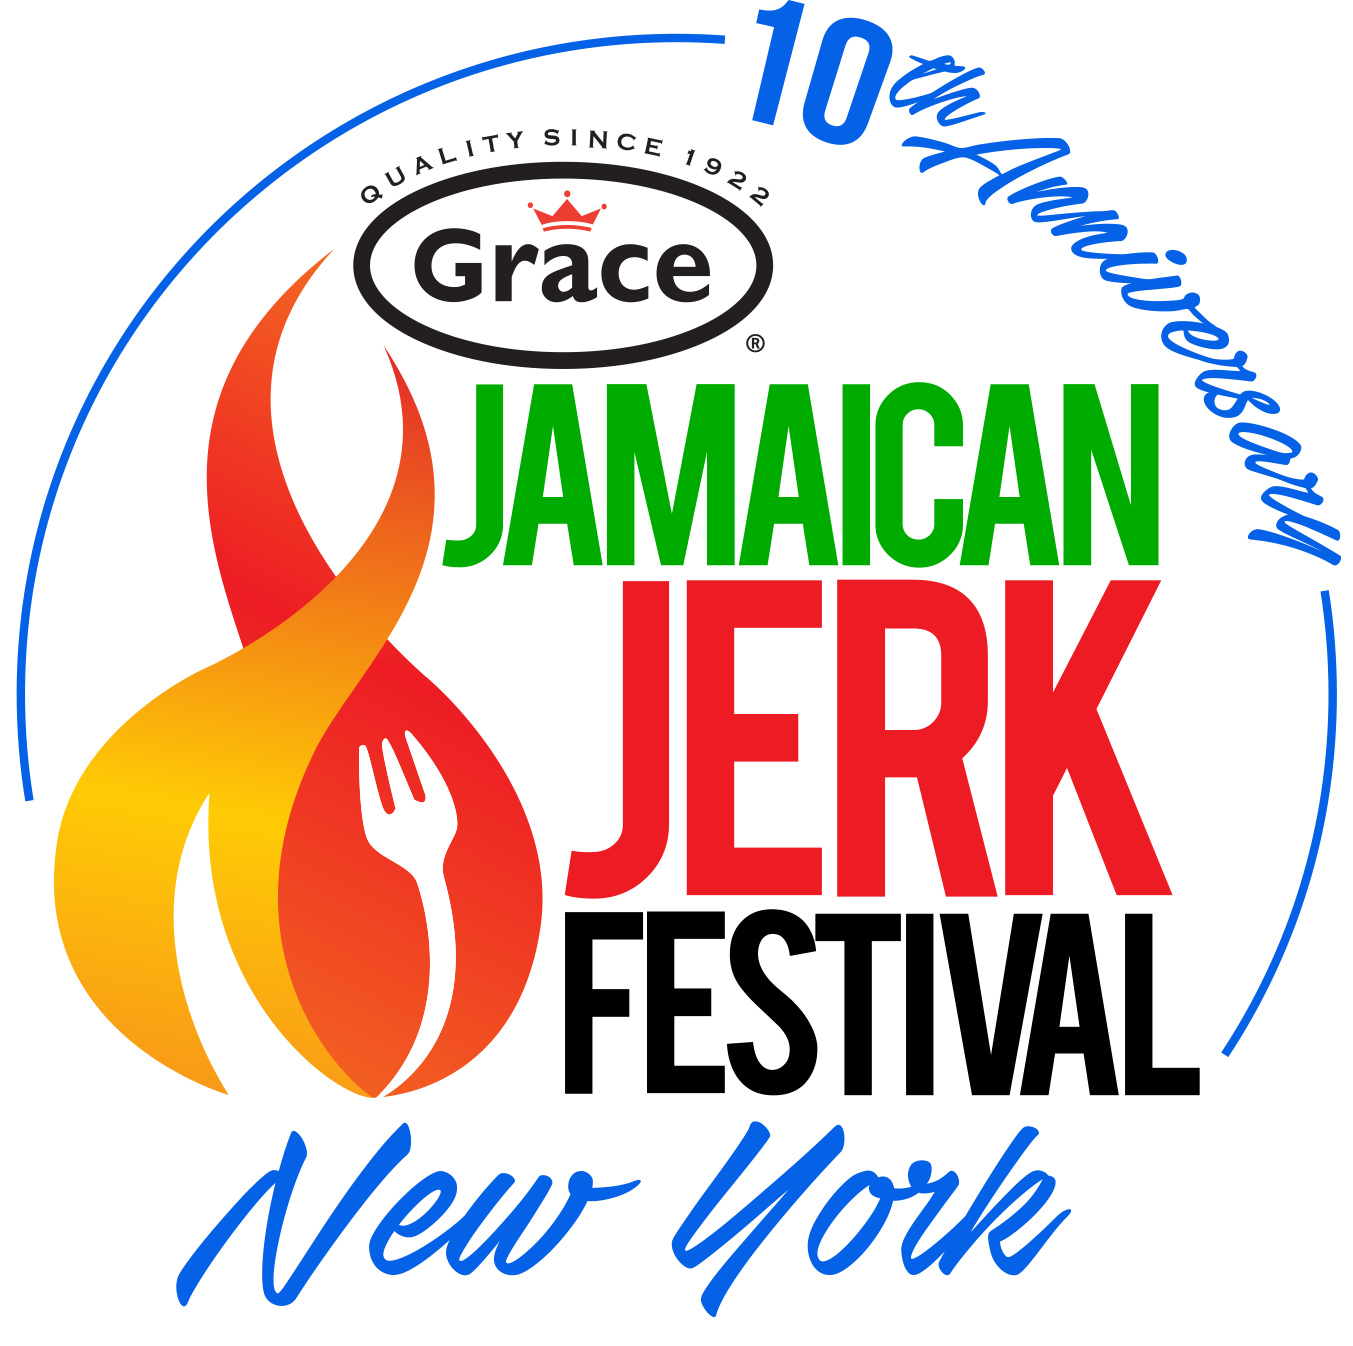 Grace Jamaican Jerk Festival New York